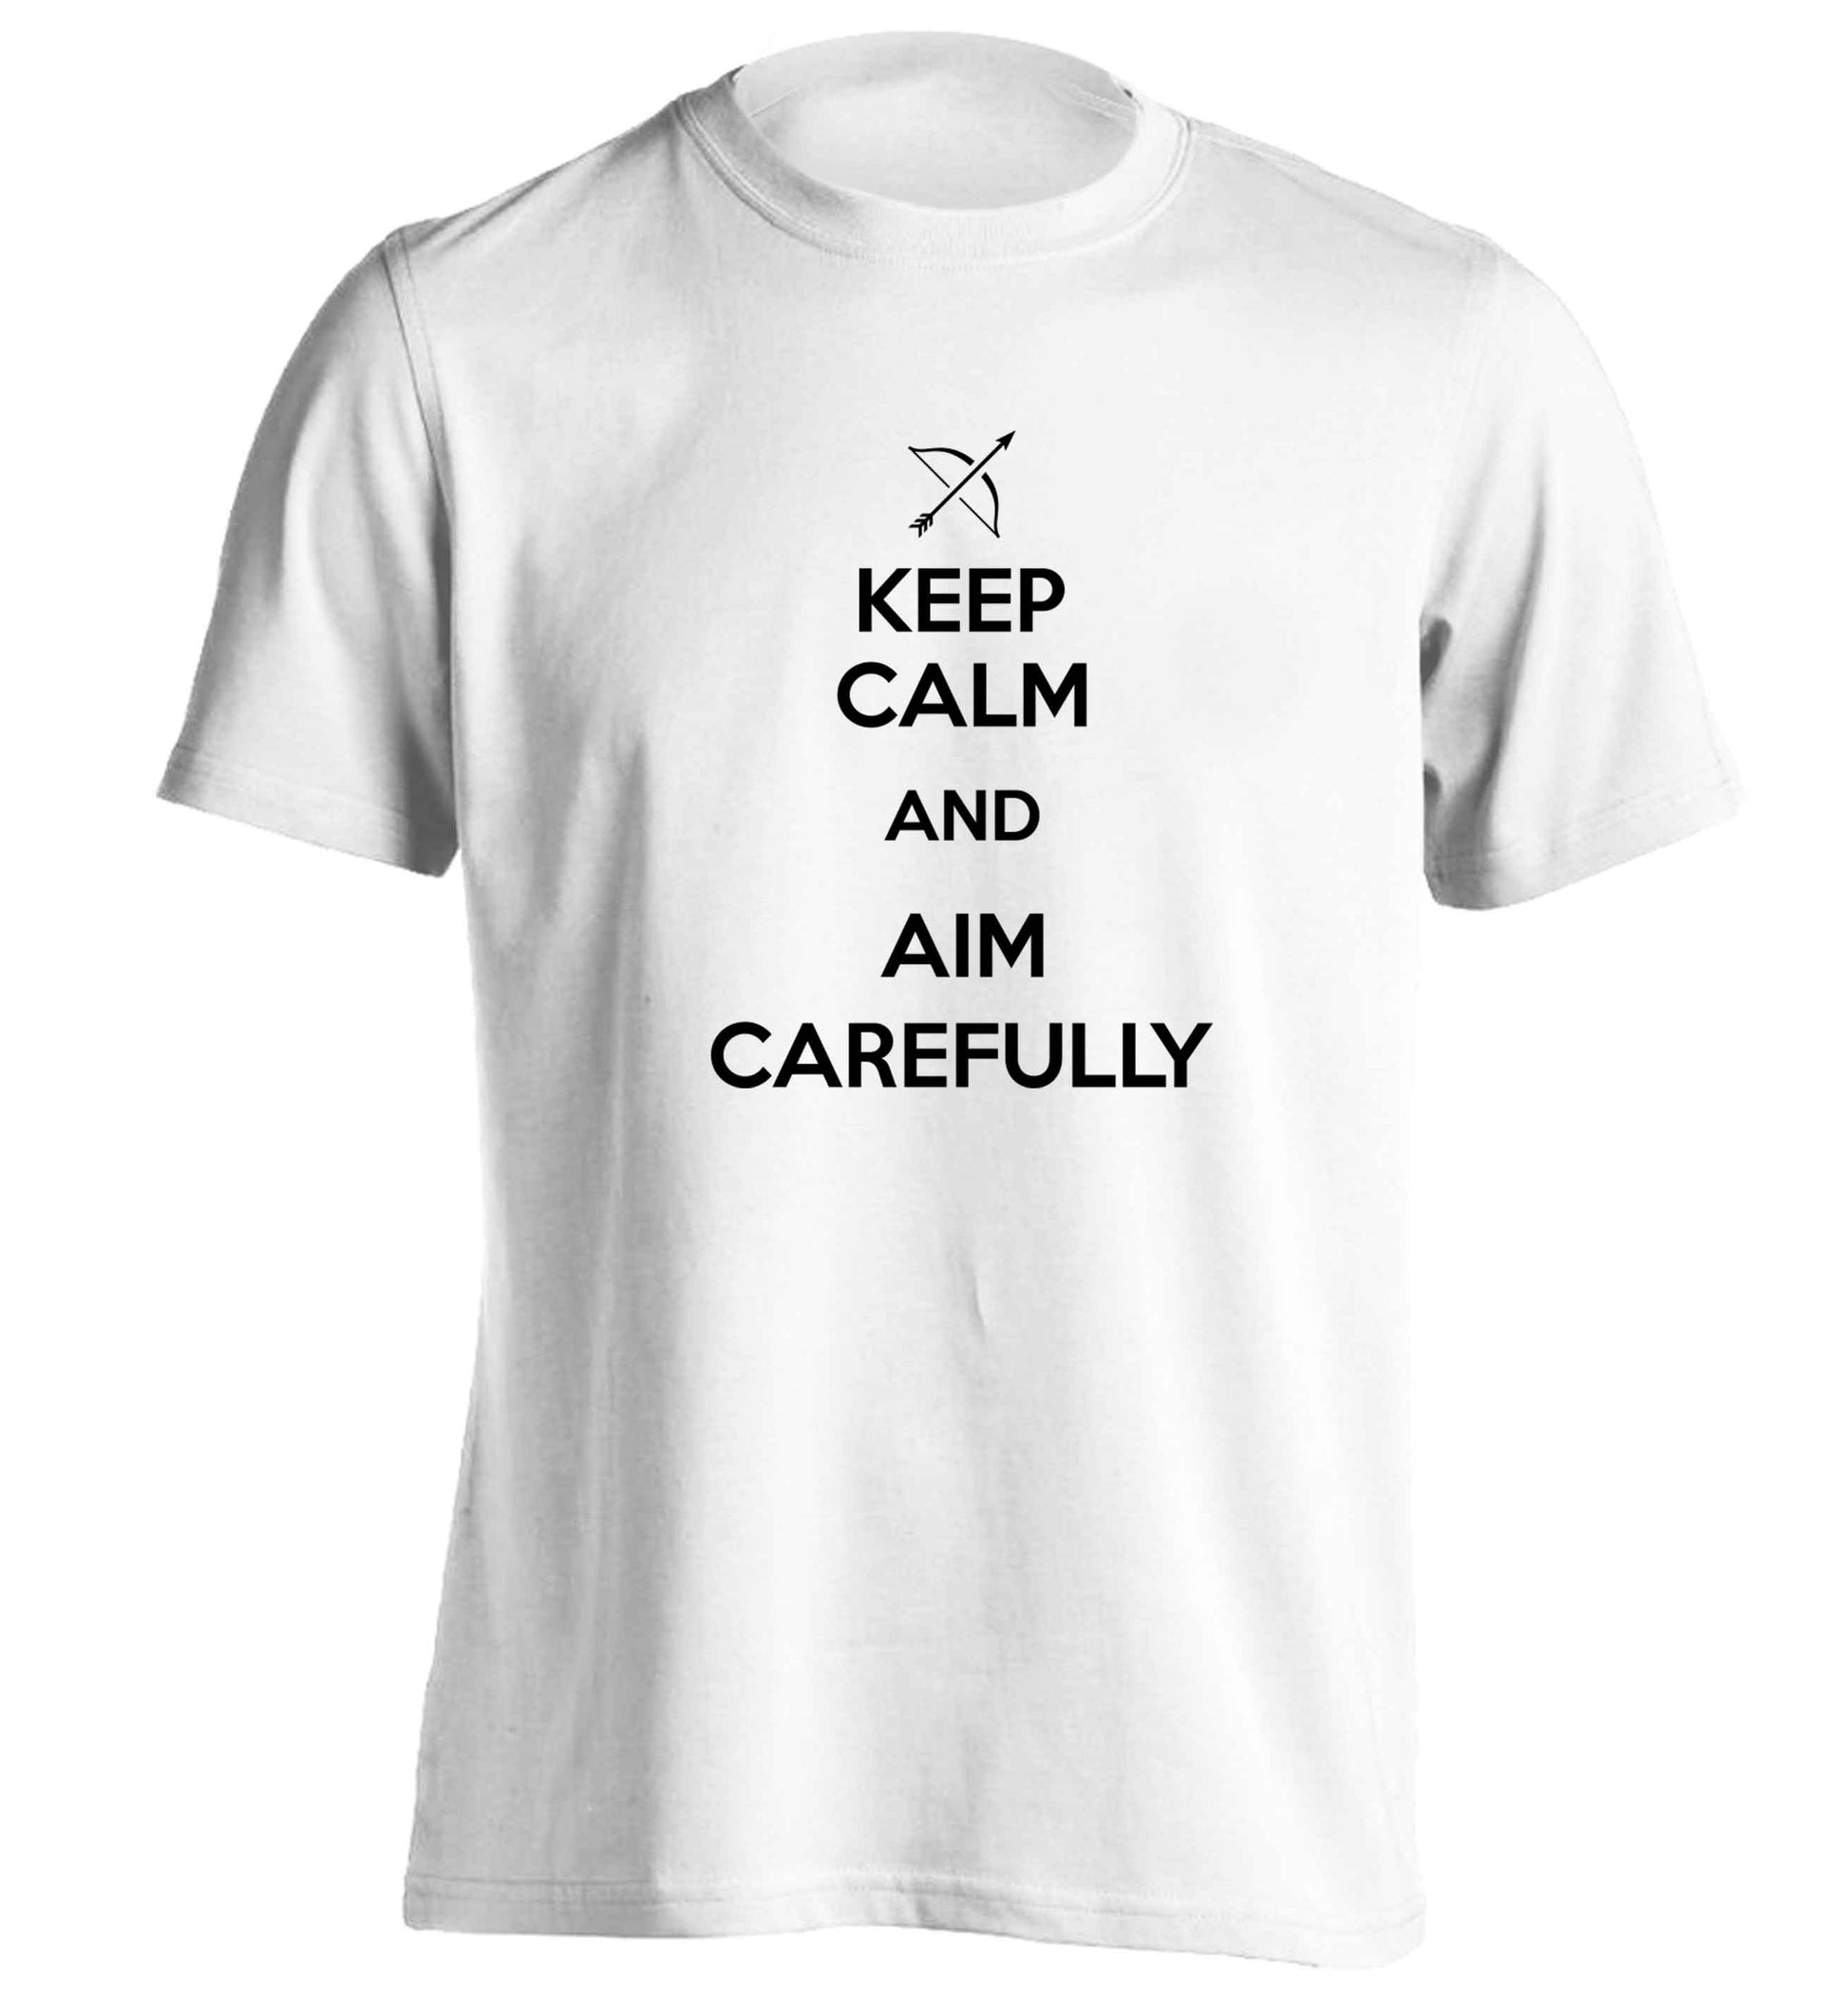 Keep calm and aim carefully adults unisex white Tshirt 2XL